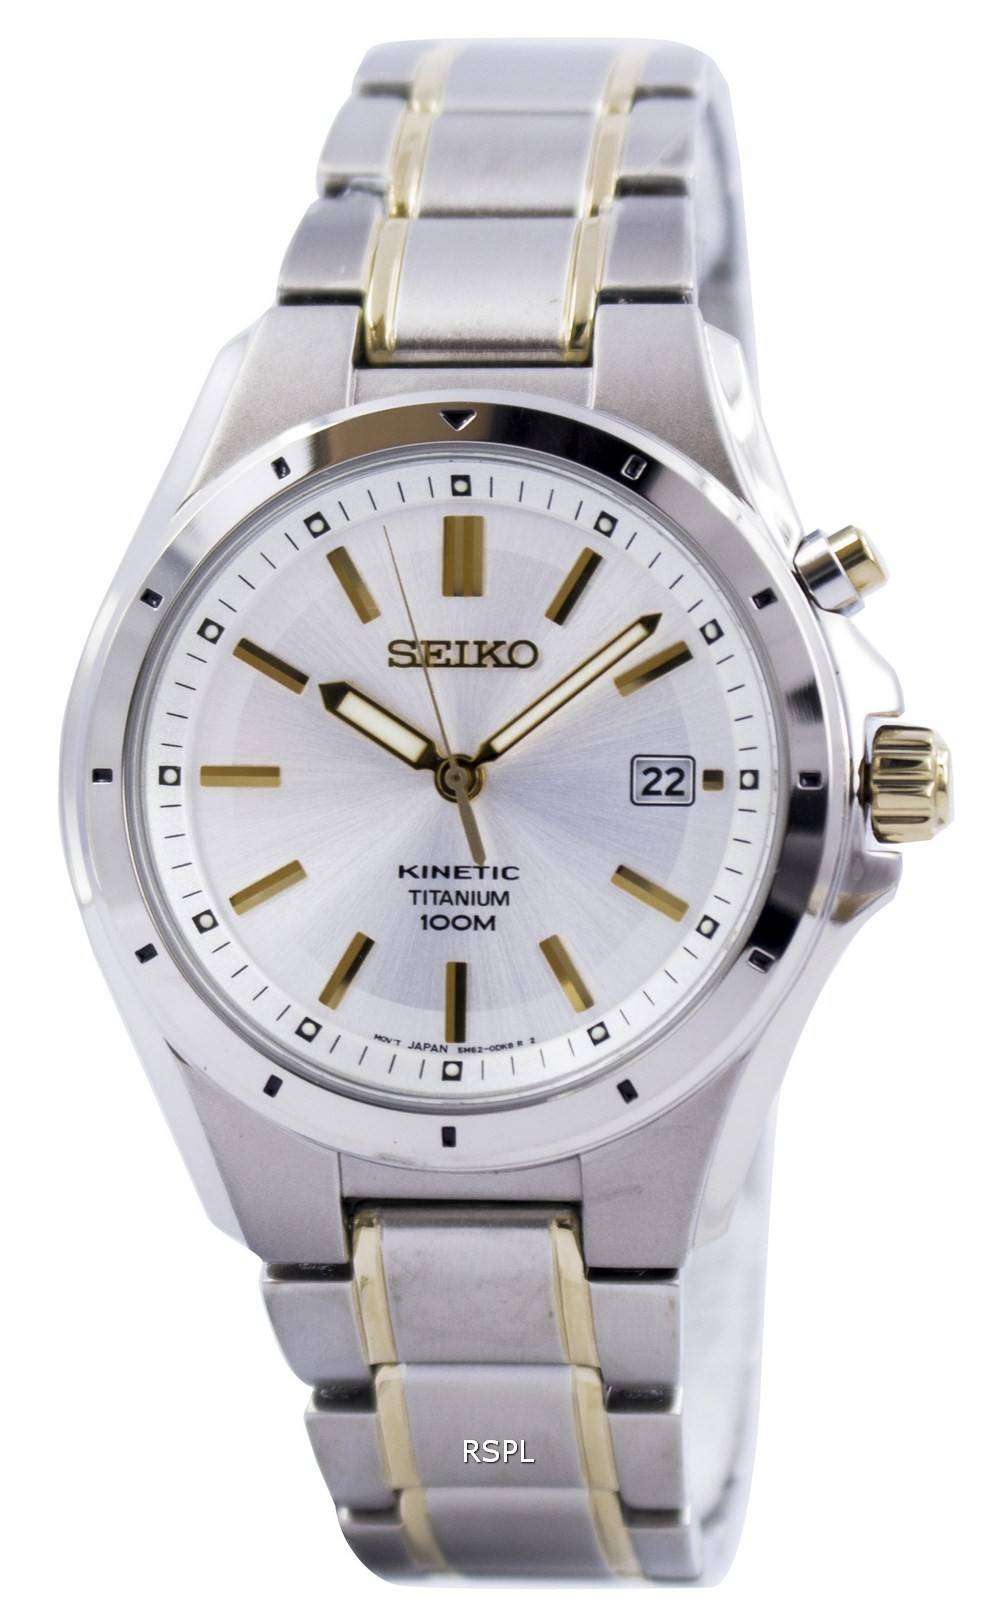 Seiko Kinetic Titanium 100m Watch | lupon.gov.ph